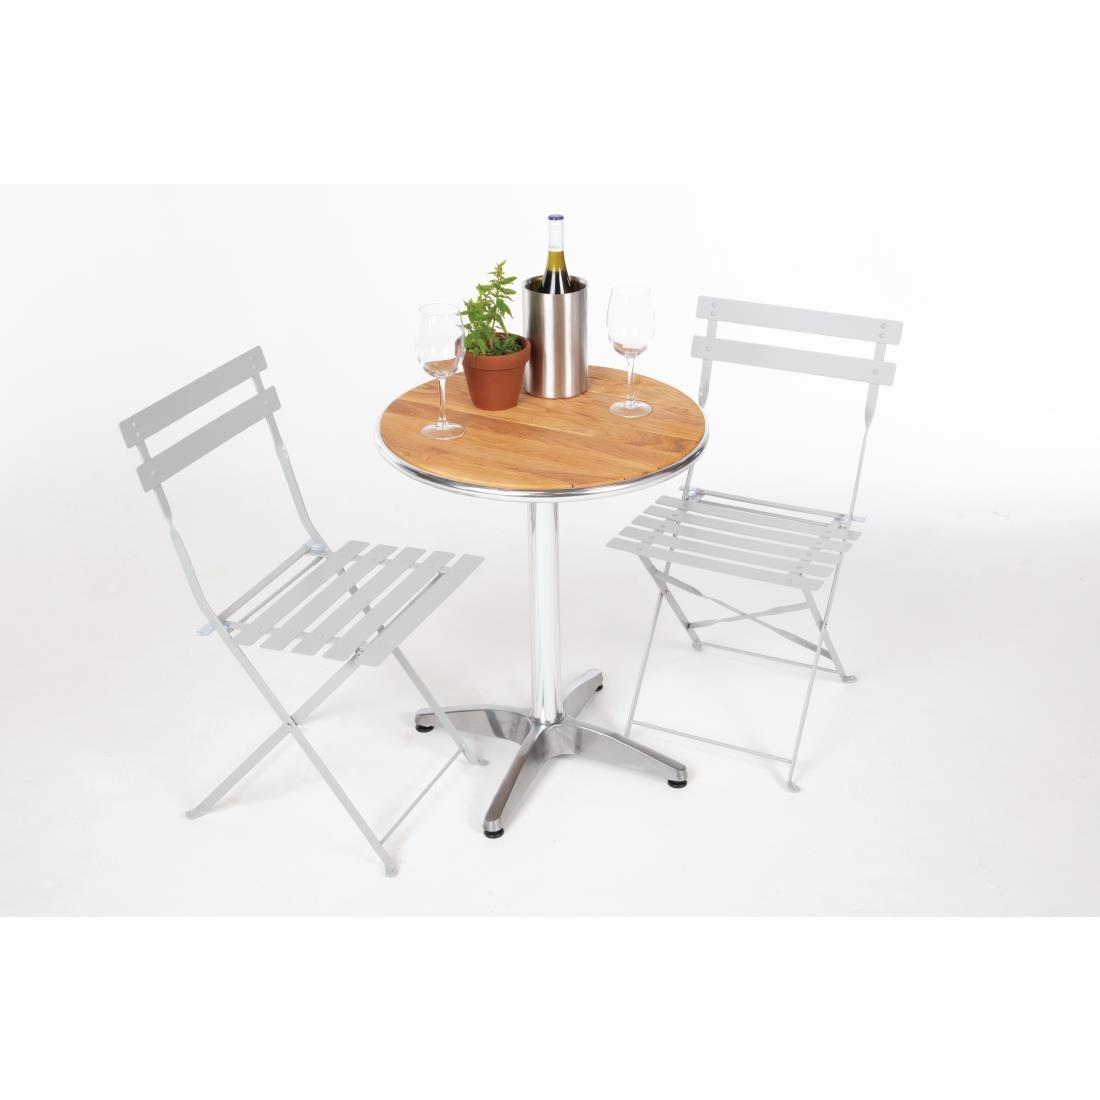 Bolero Steel Pavement StyleFolding Chairs Grey (Pack of 2) - GH551  - 8